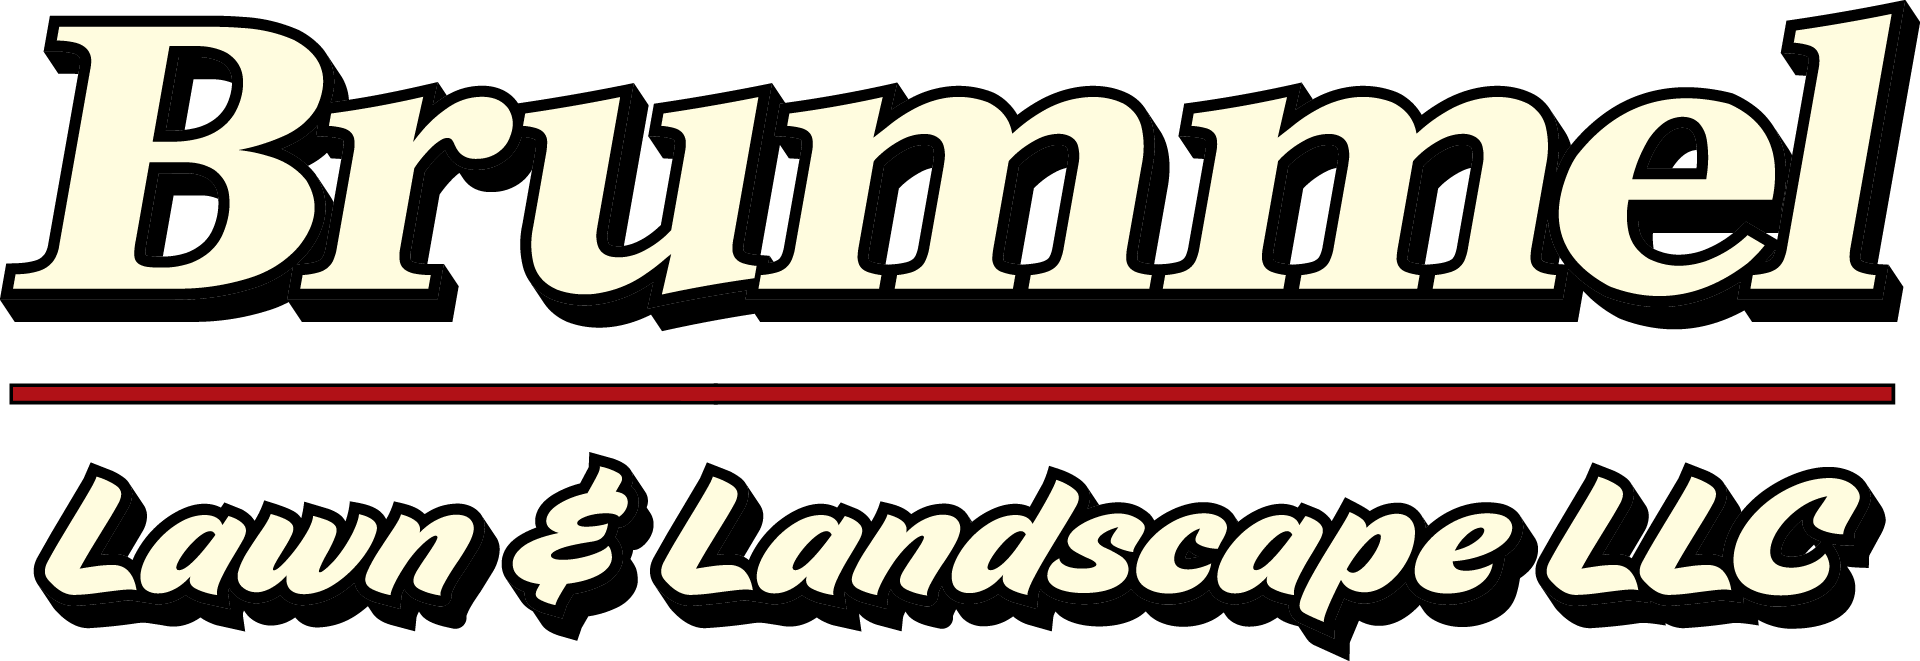 Brummel-Lawn-Care-Logo